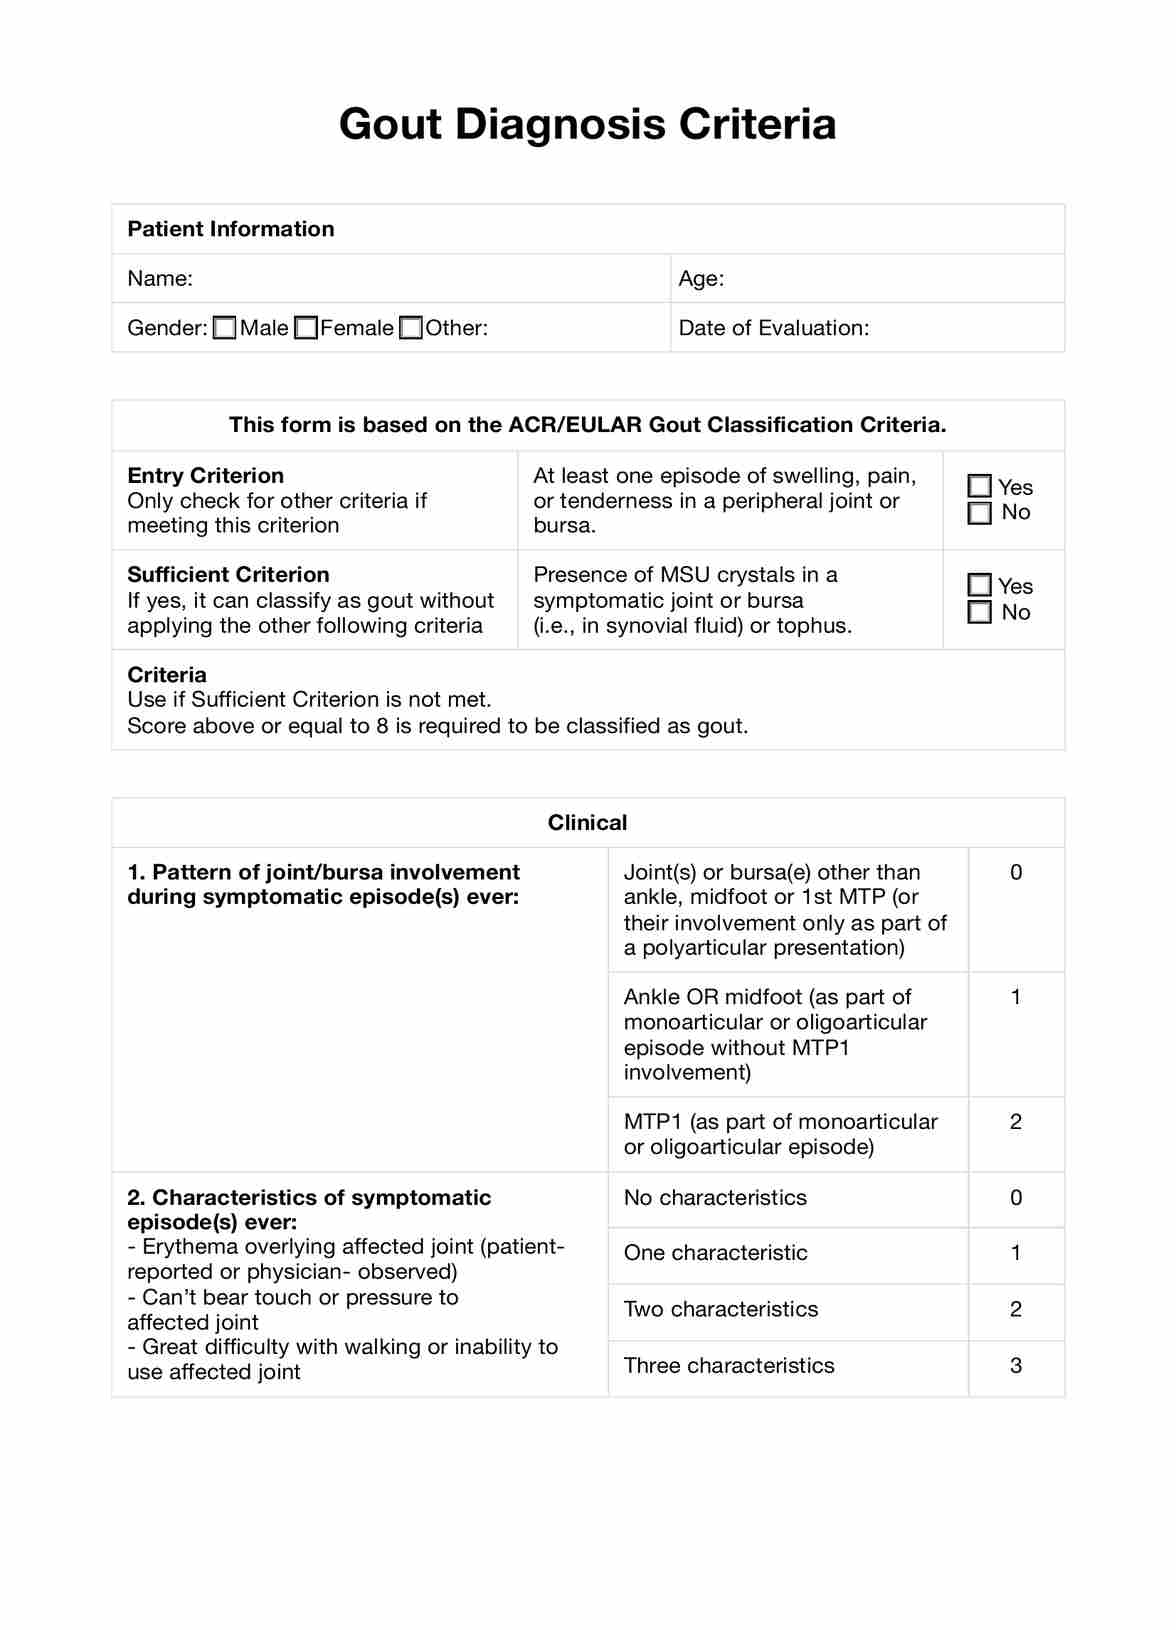 Gout Diagnosis Criteria PDF Example